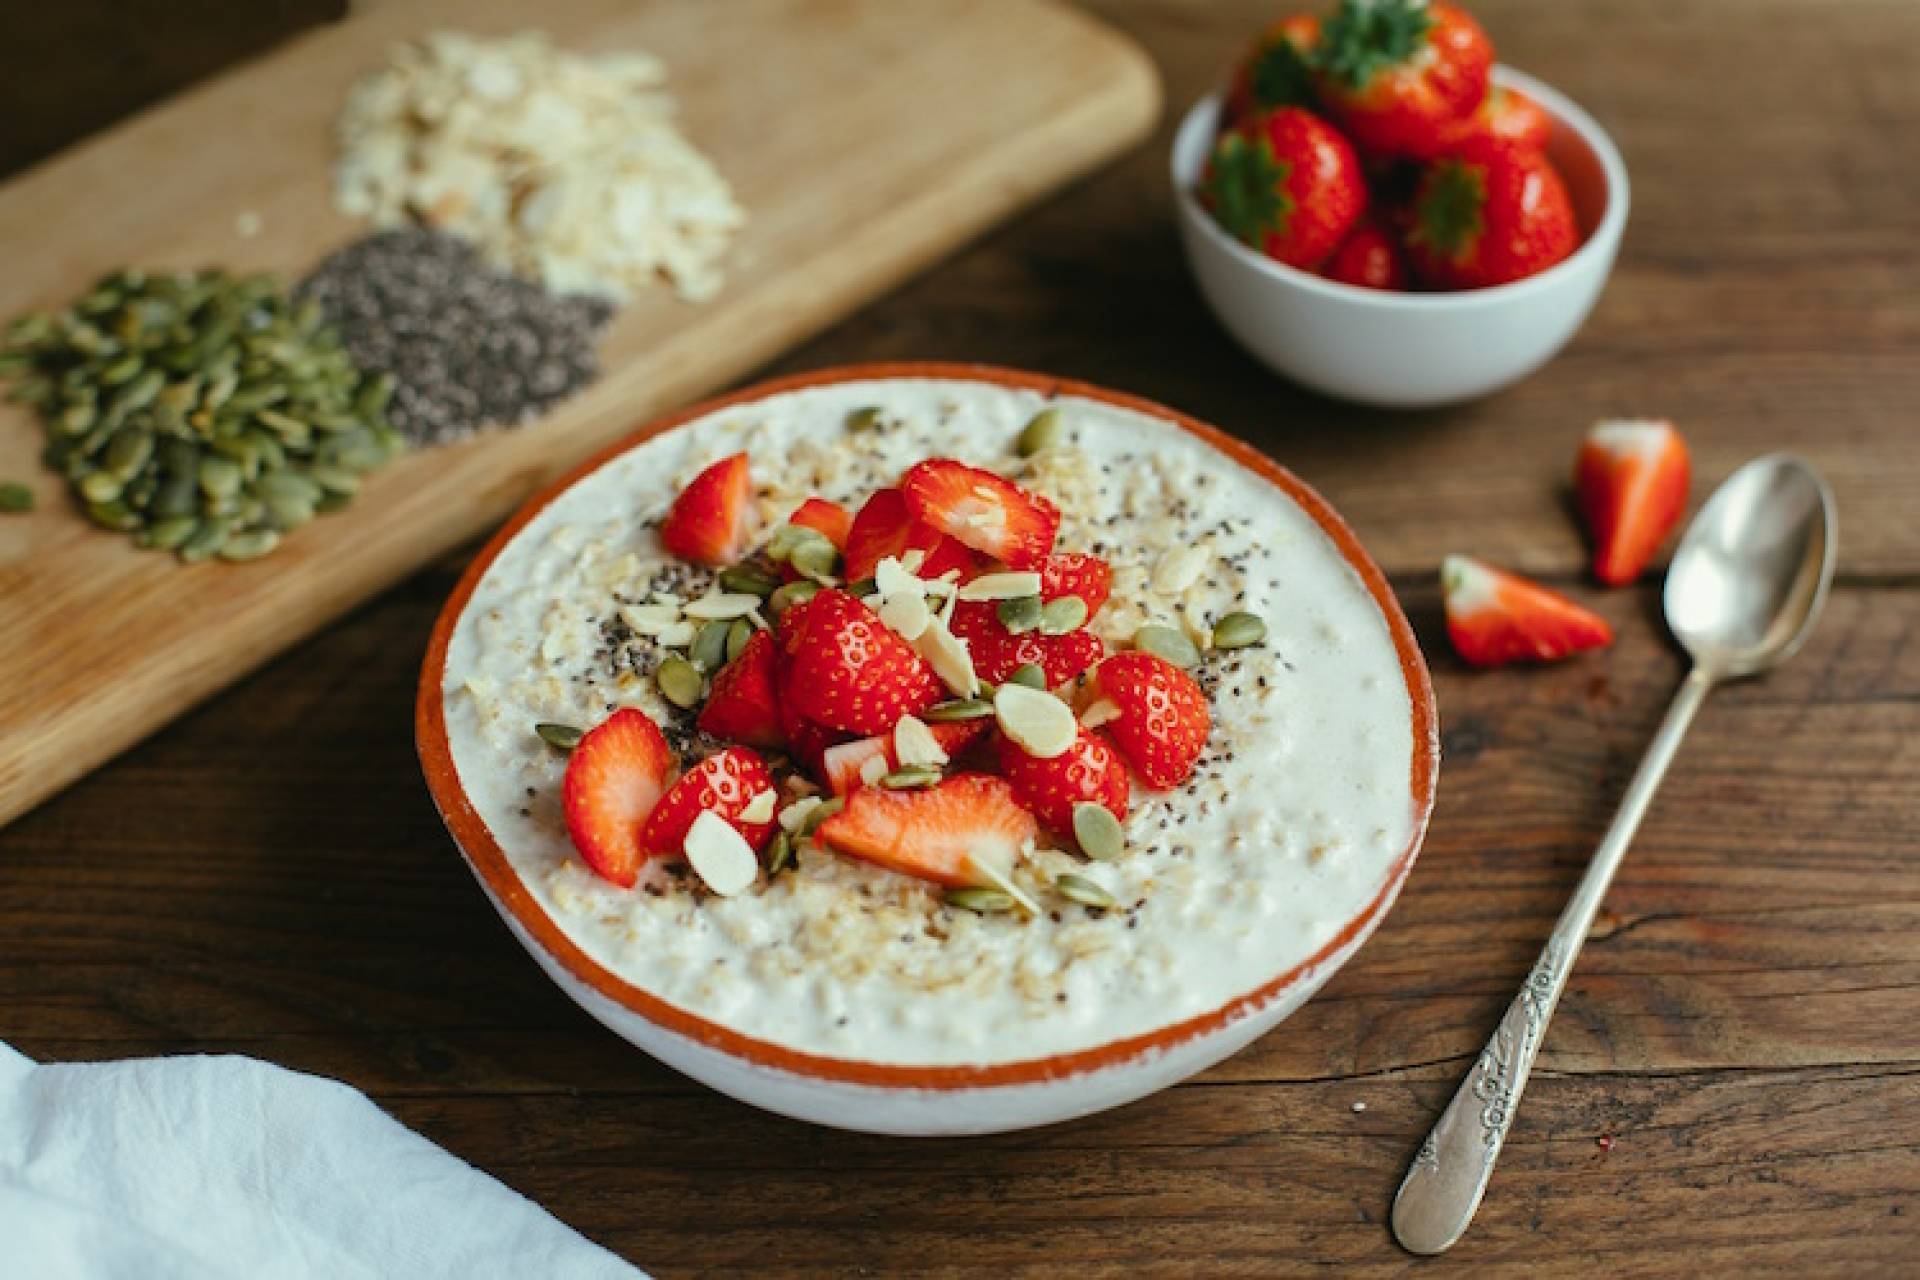 Strawberry & coconut oatmeal (vegan)